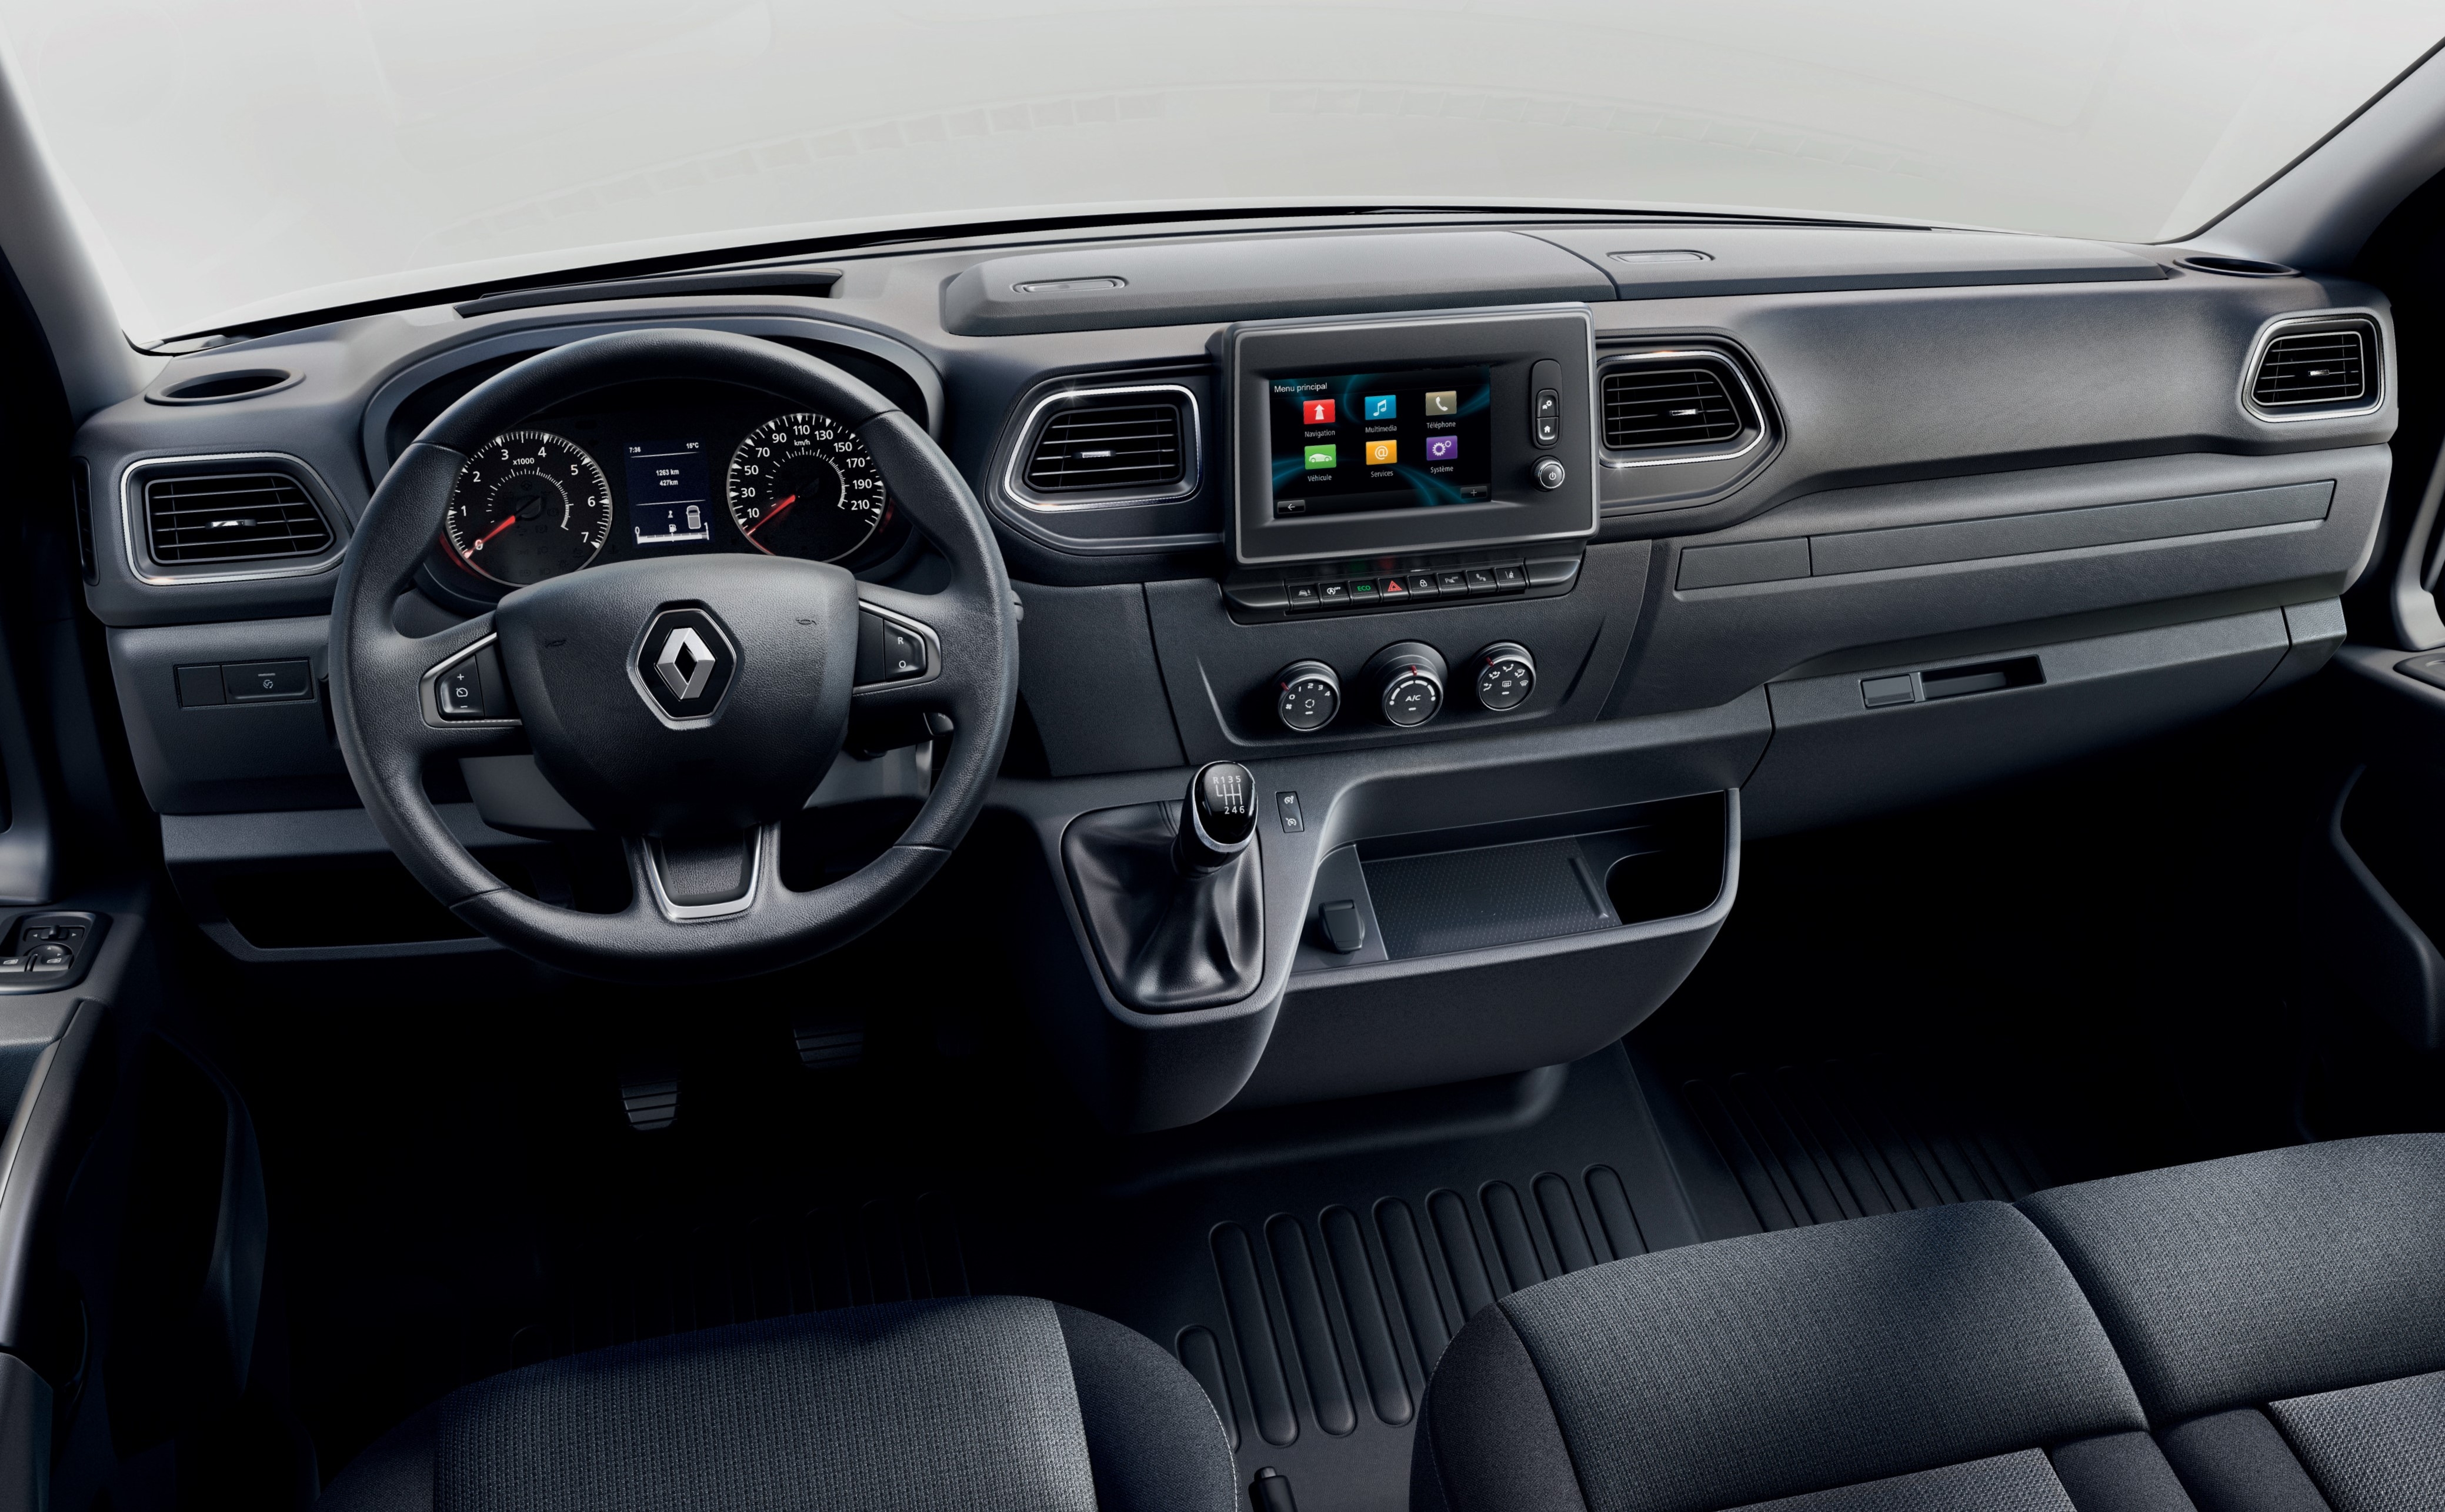 Renault Trafic interior 2019